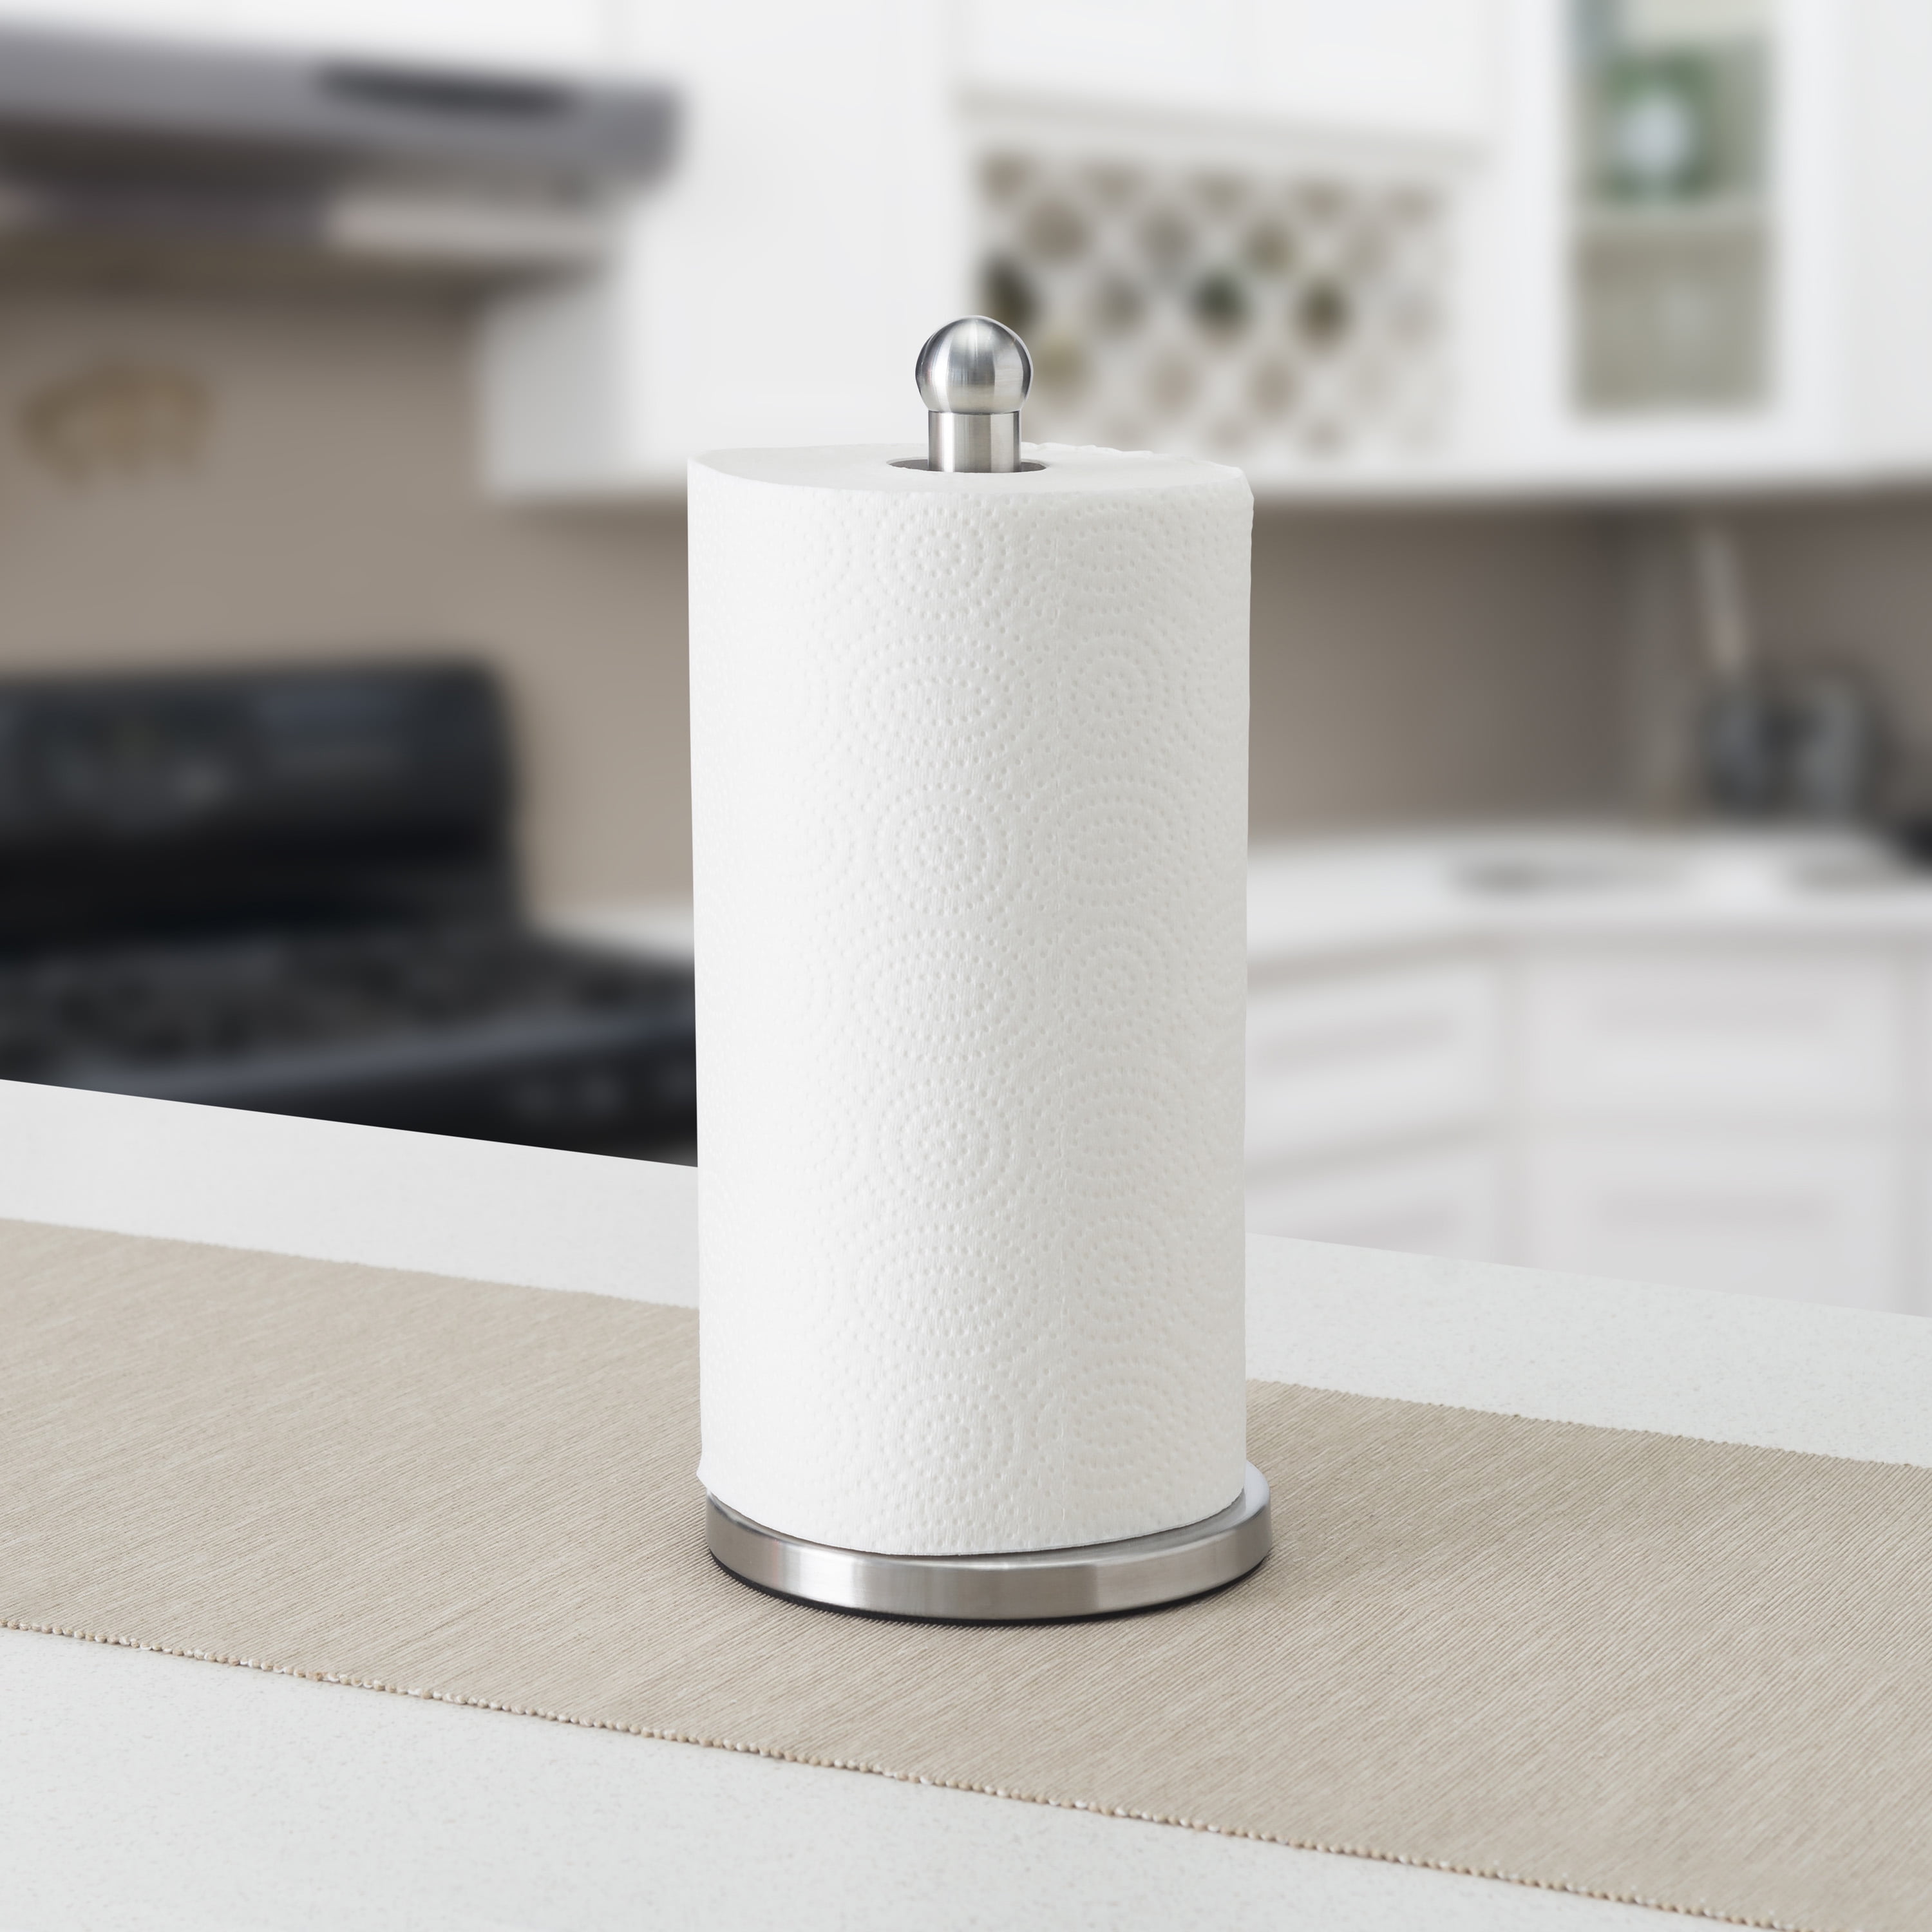 1 Stainless Steel Paper Towel Holder Bed Bath Beyond Kitchen Utensils Home  Decor - Toilet Paper Holders, Facebook Marketplace